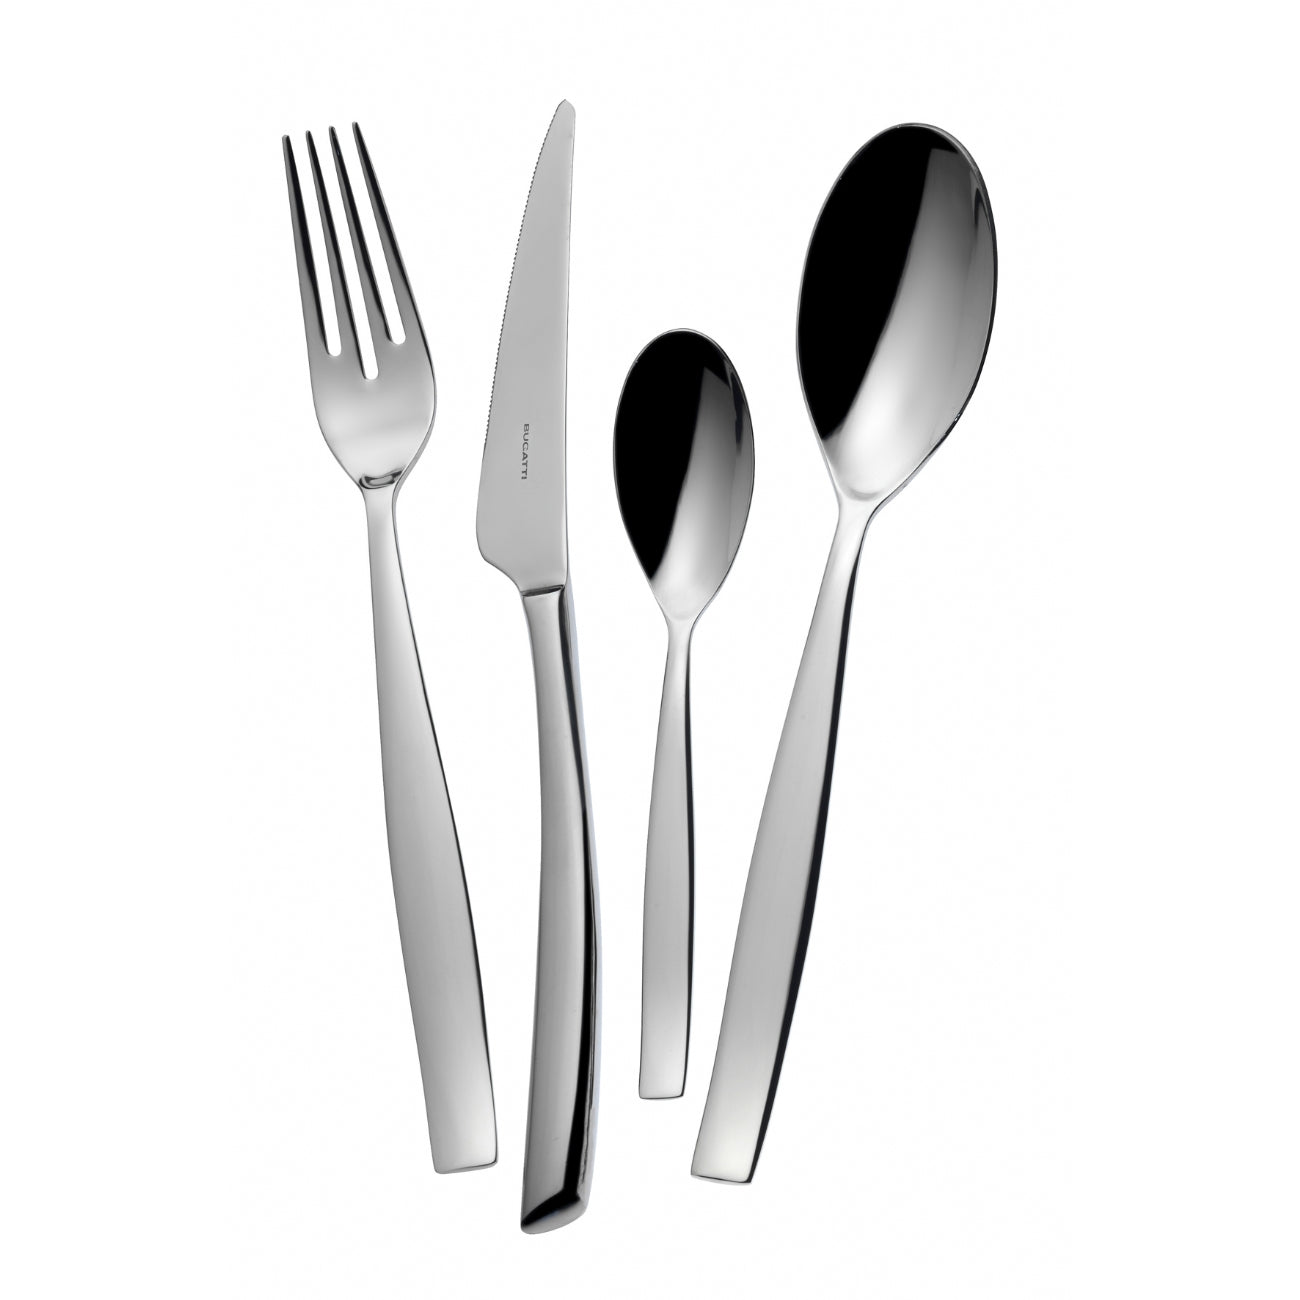 BUGATTI, Toscana, 75-piece cutlery set in 18/10 stainless steel